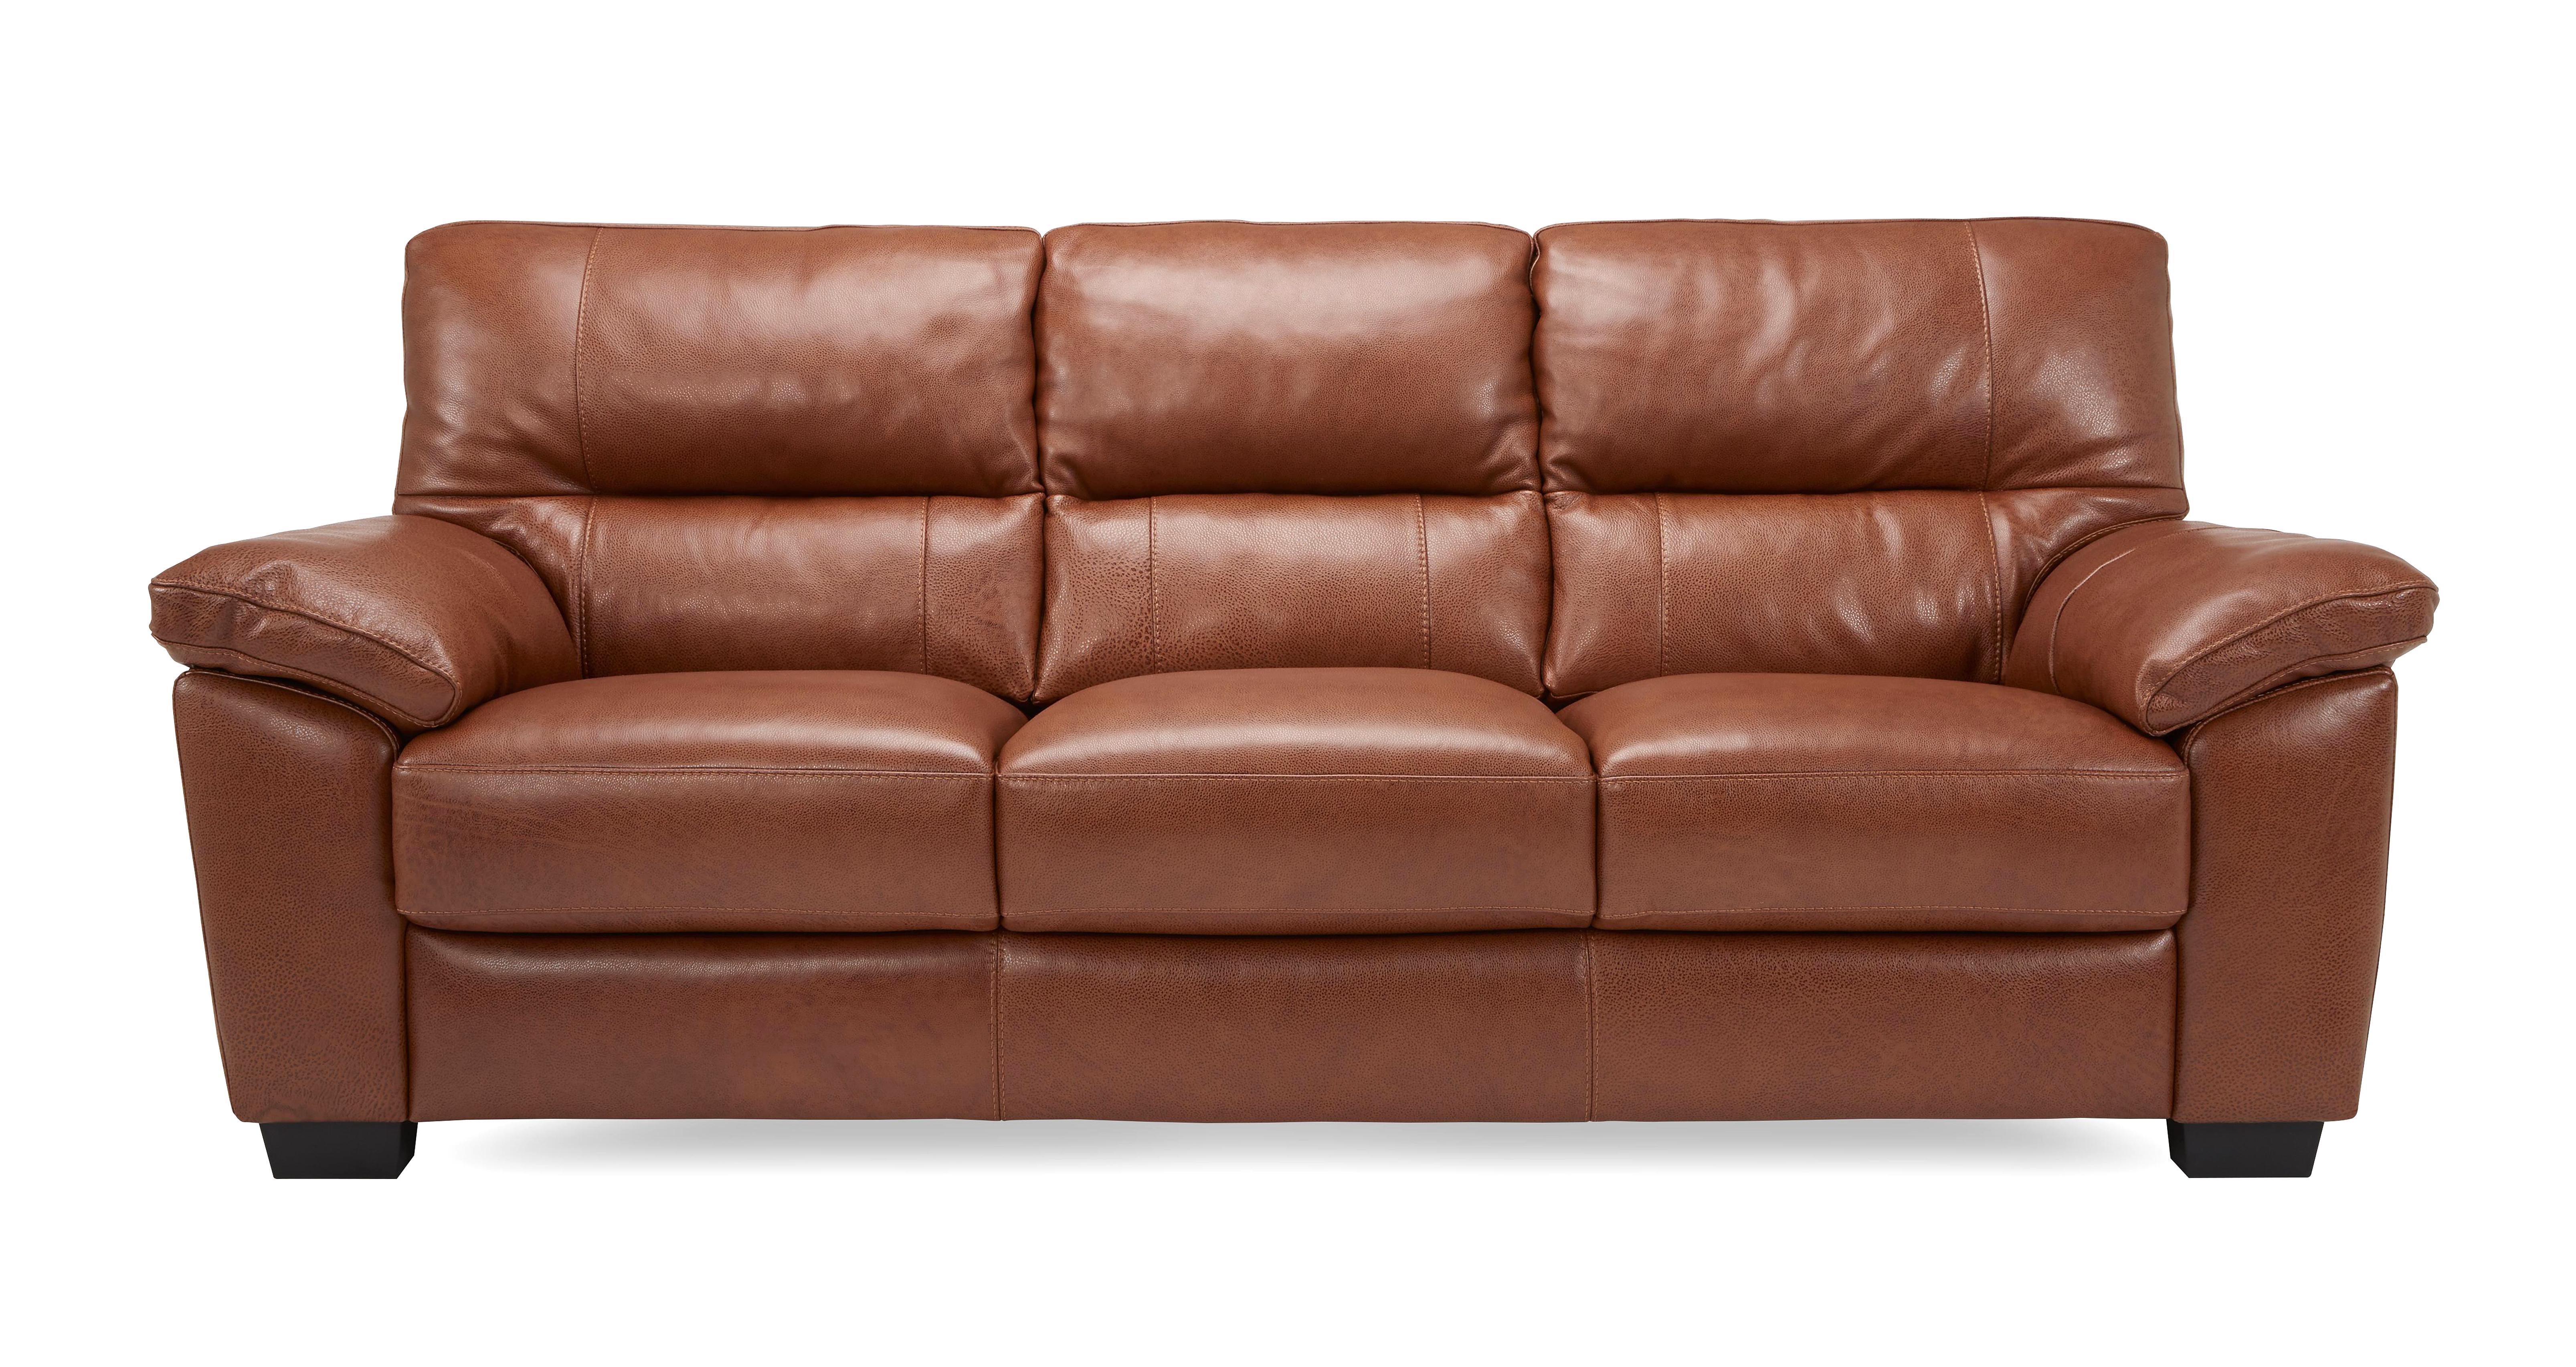 leather sofa set used for sale michigan